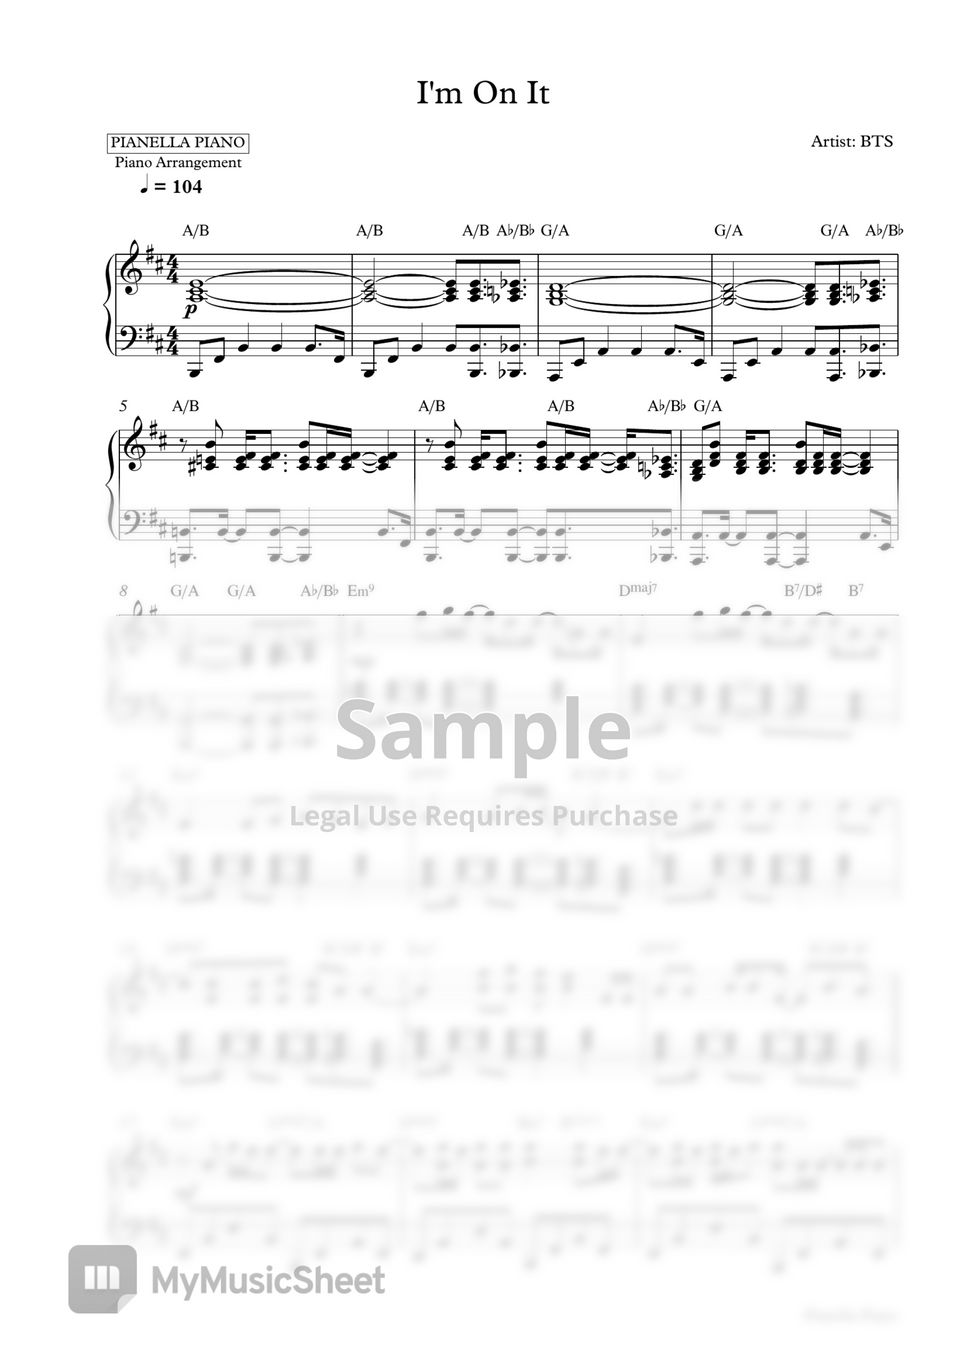 BTS - I'm On It (Piano Sheet) by Pianella Piano